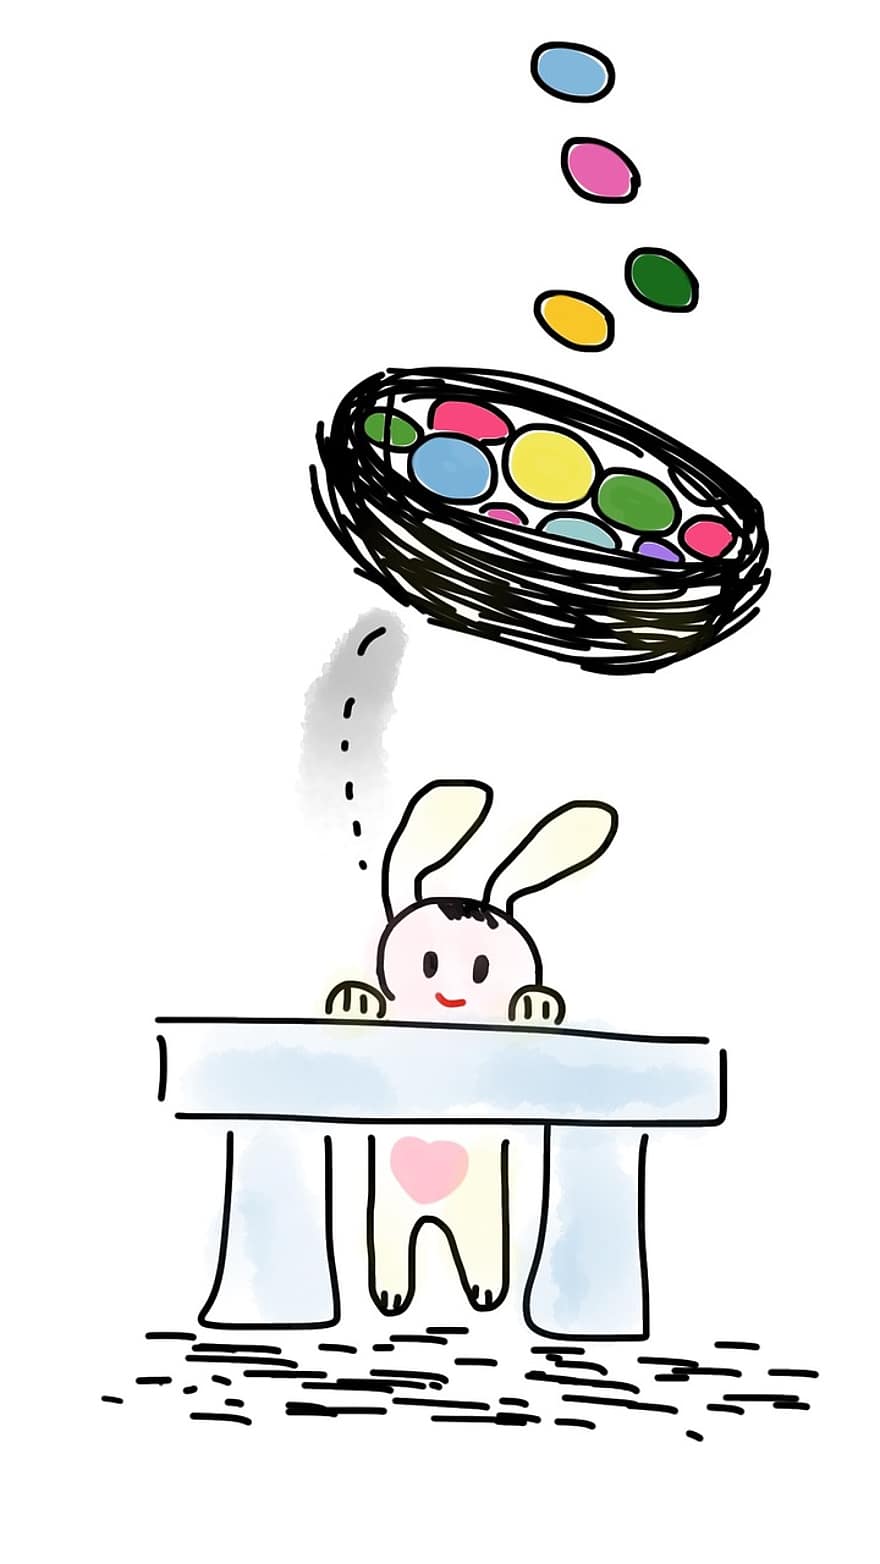 Easter, Bunny, Eggs, Basket, Rabbit, Bench, Cute, Easter Bunny, Holiday, Animal, Adorable